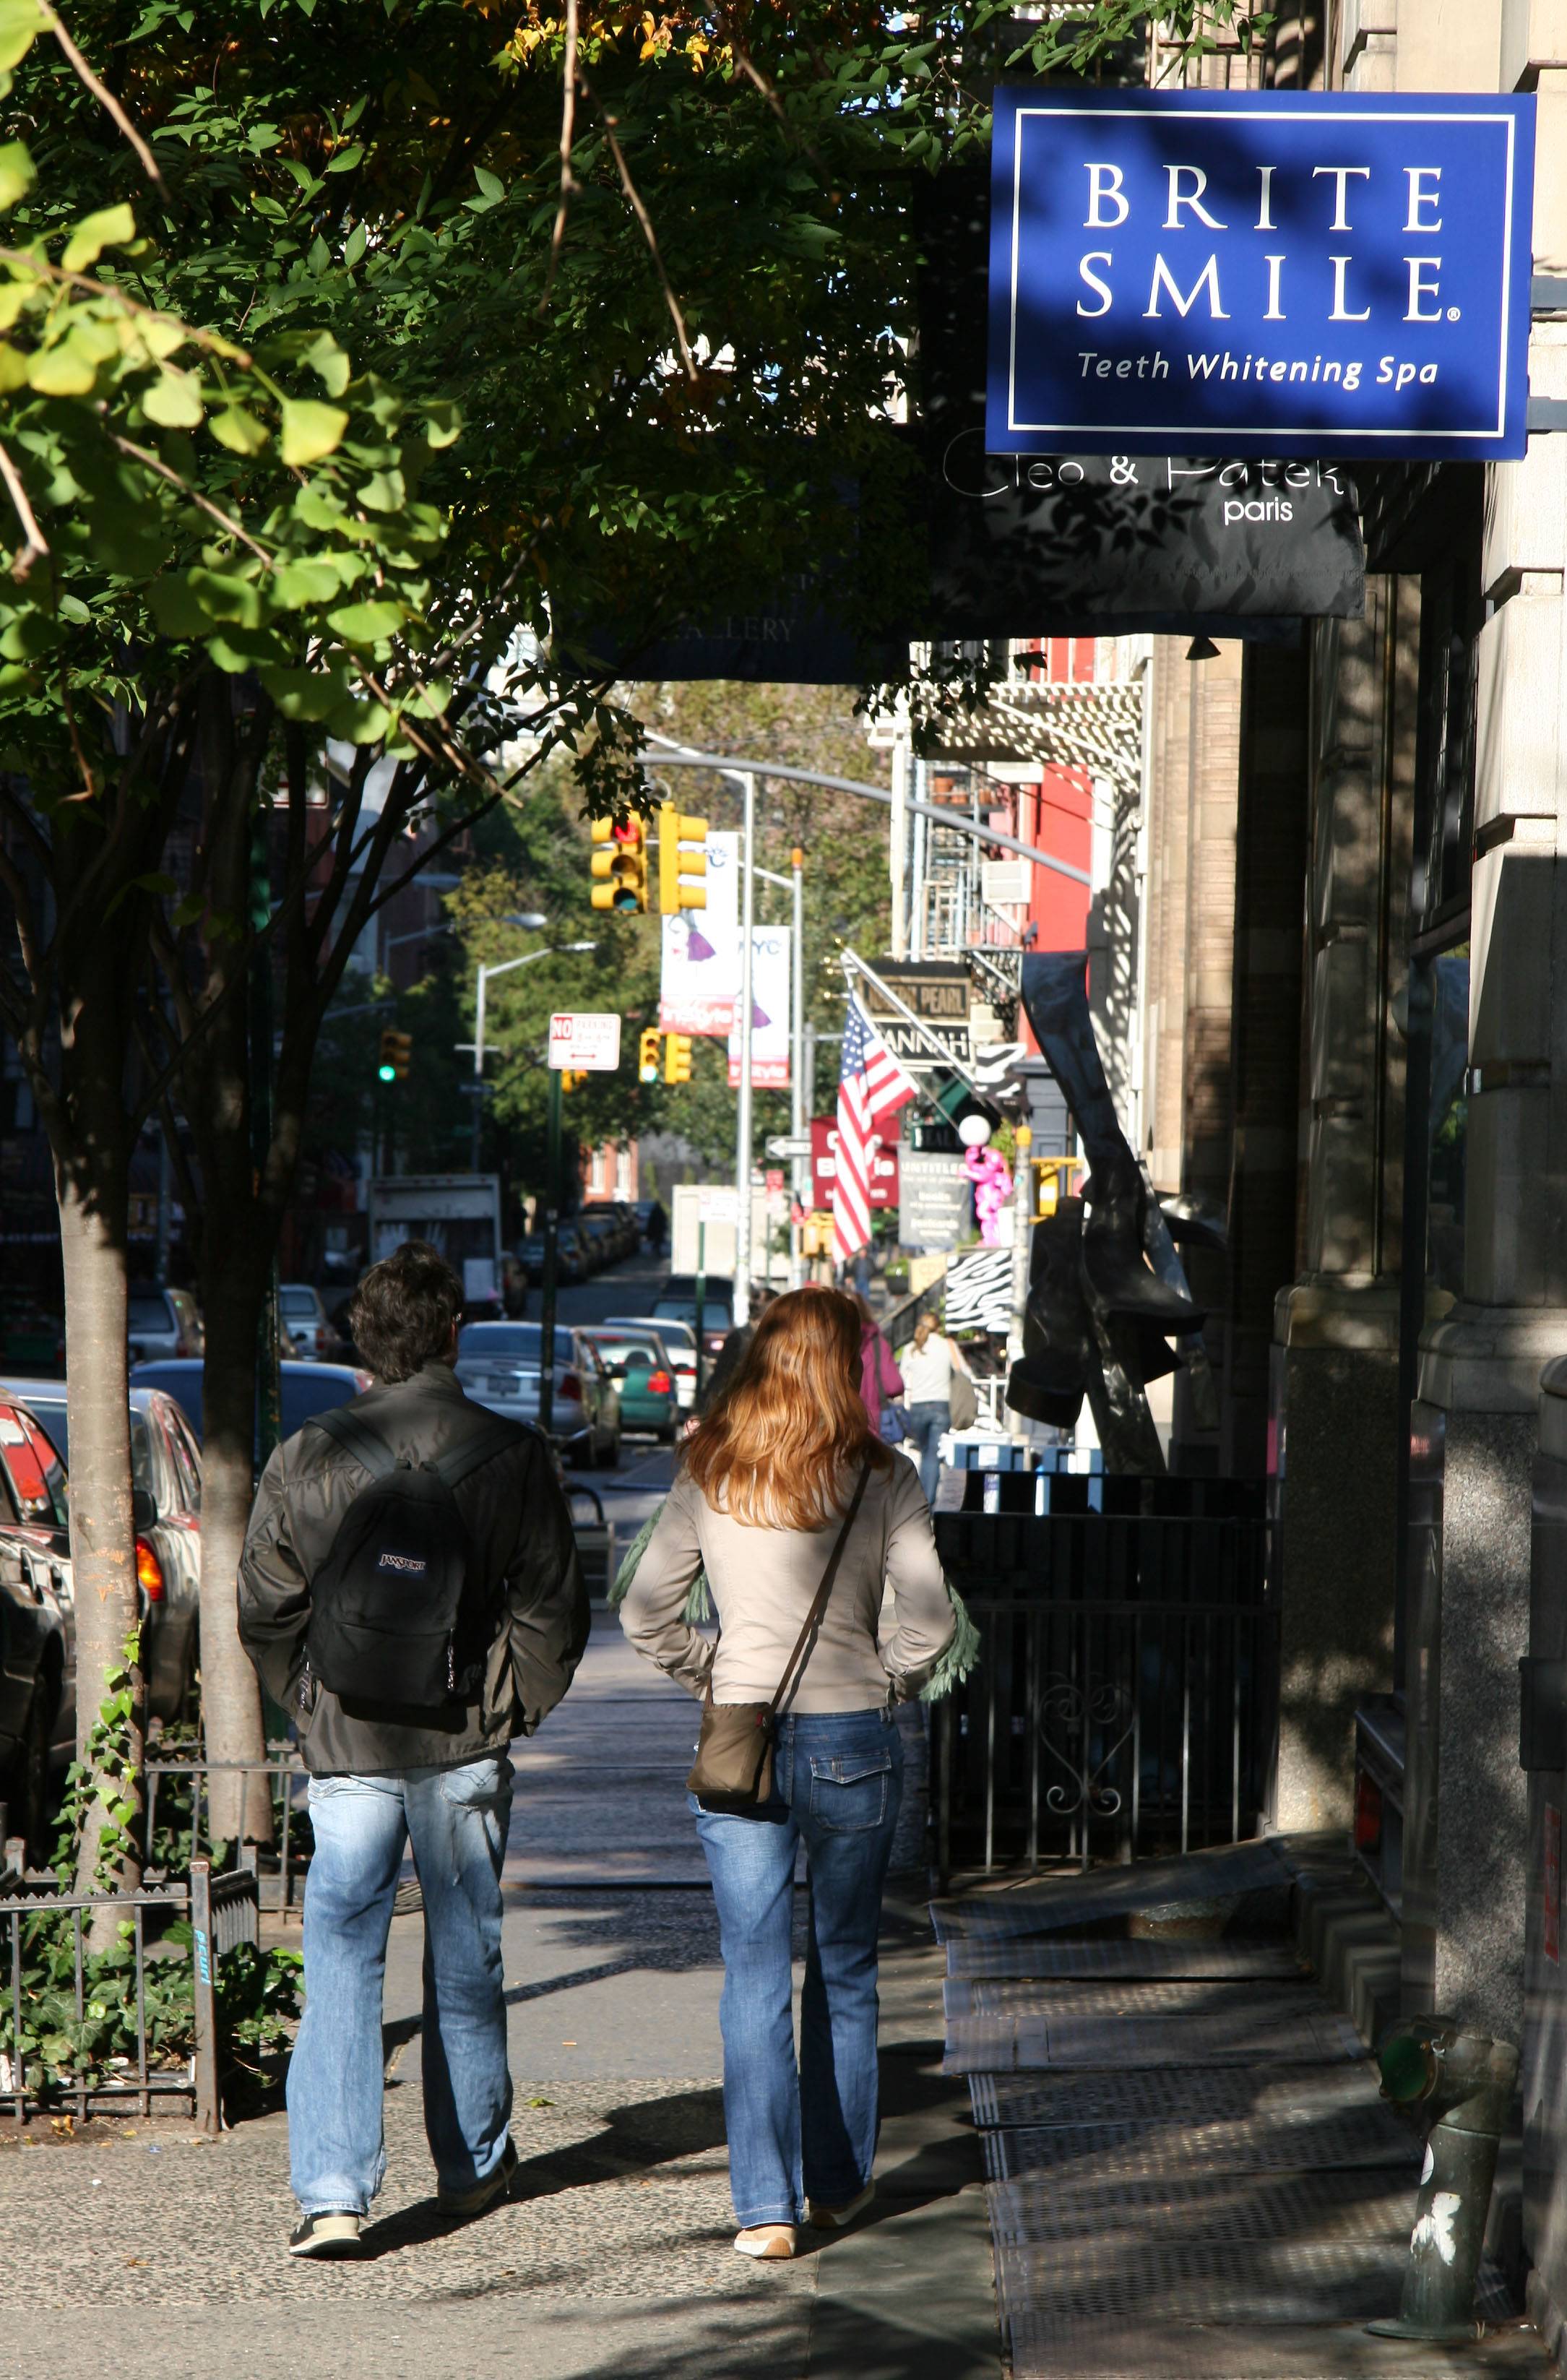 Walking by Brite Smile near West Broadway